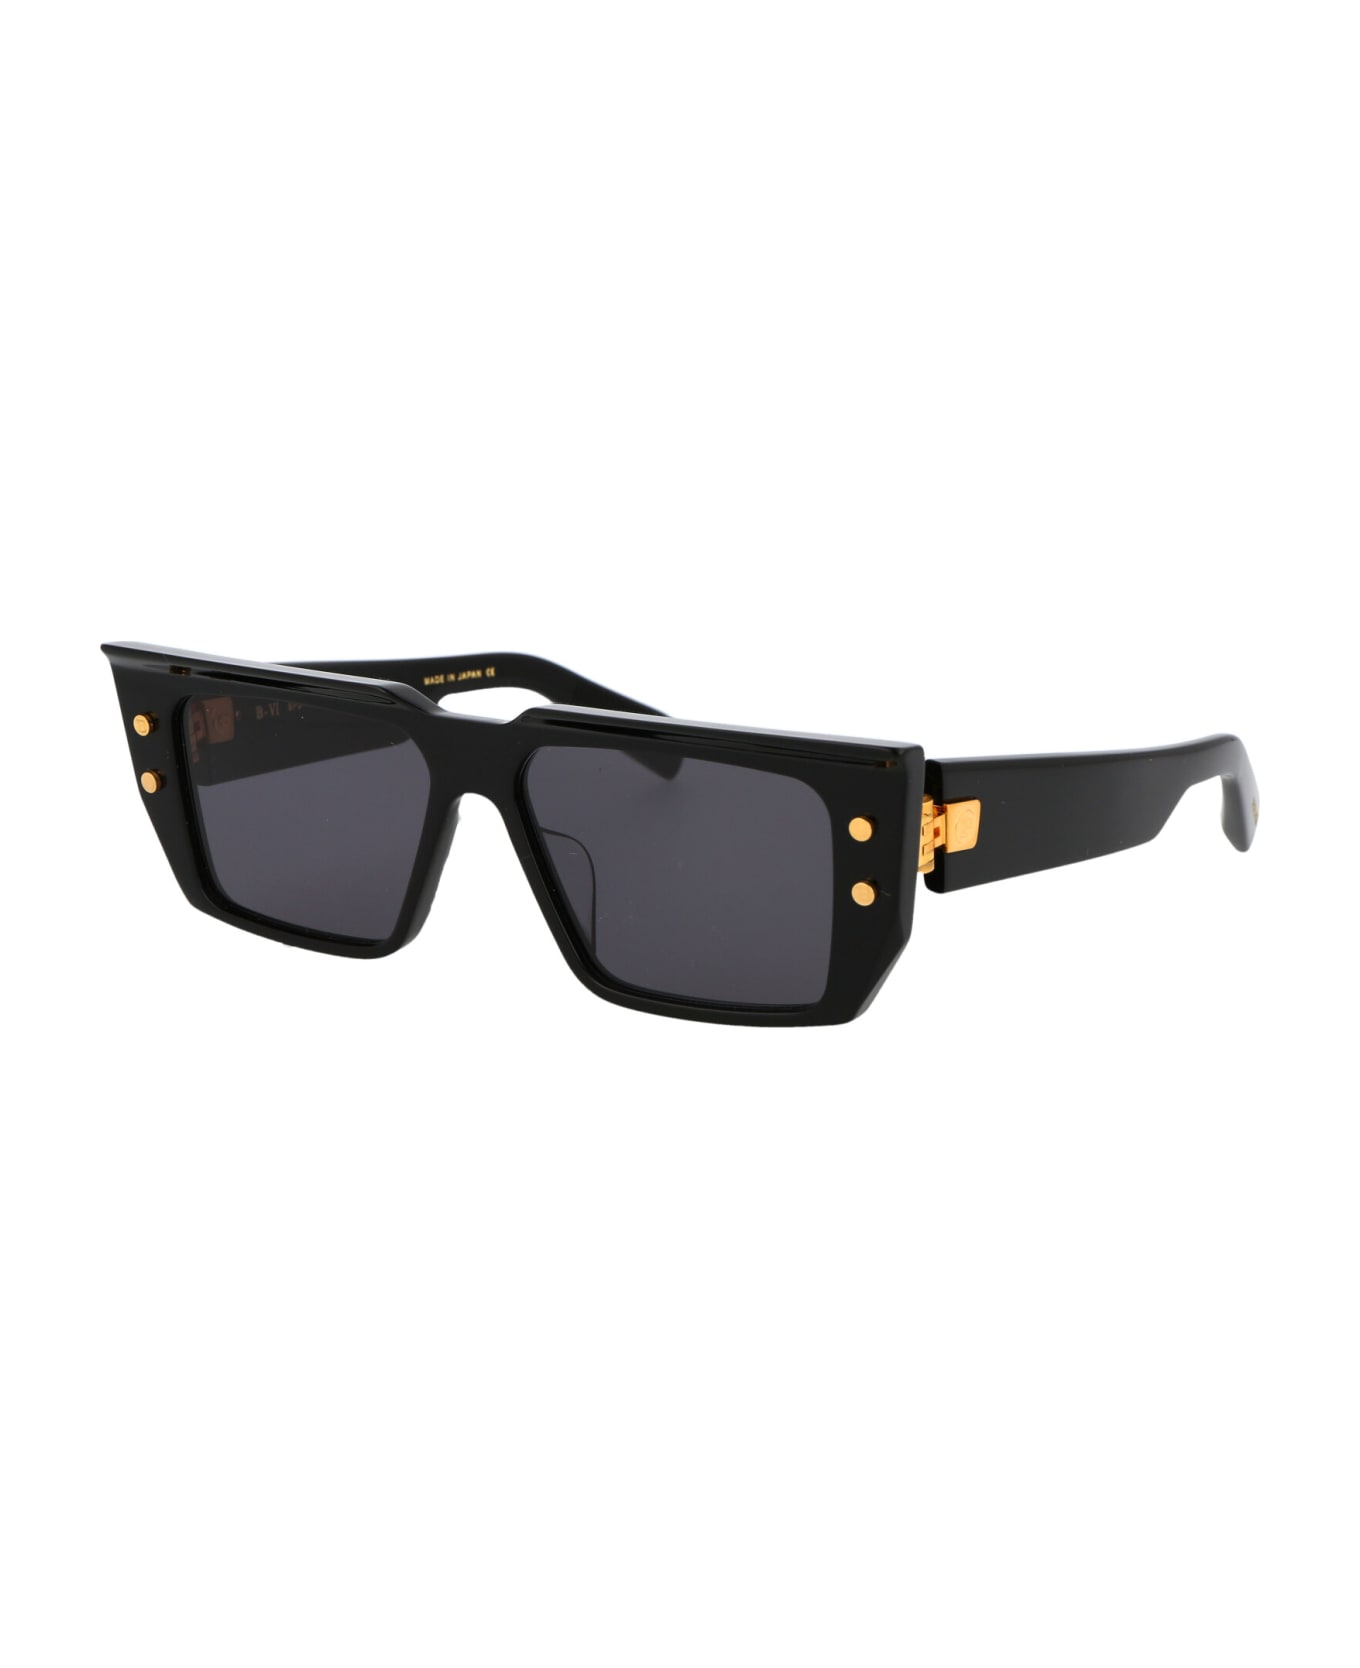 Balmain B - Vi Sunglasses - BLACK GOLD W/ DARK GREY